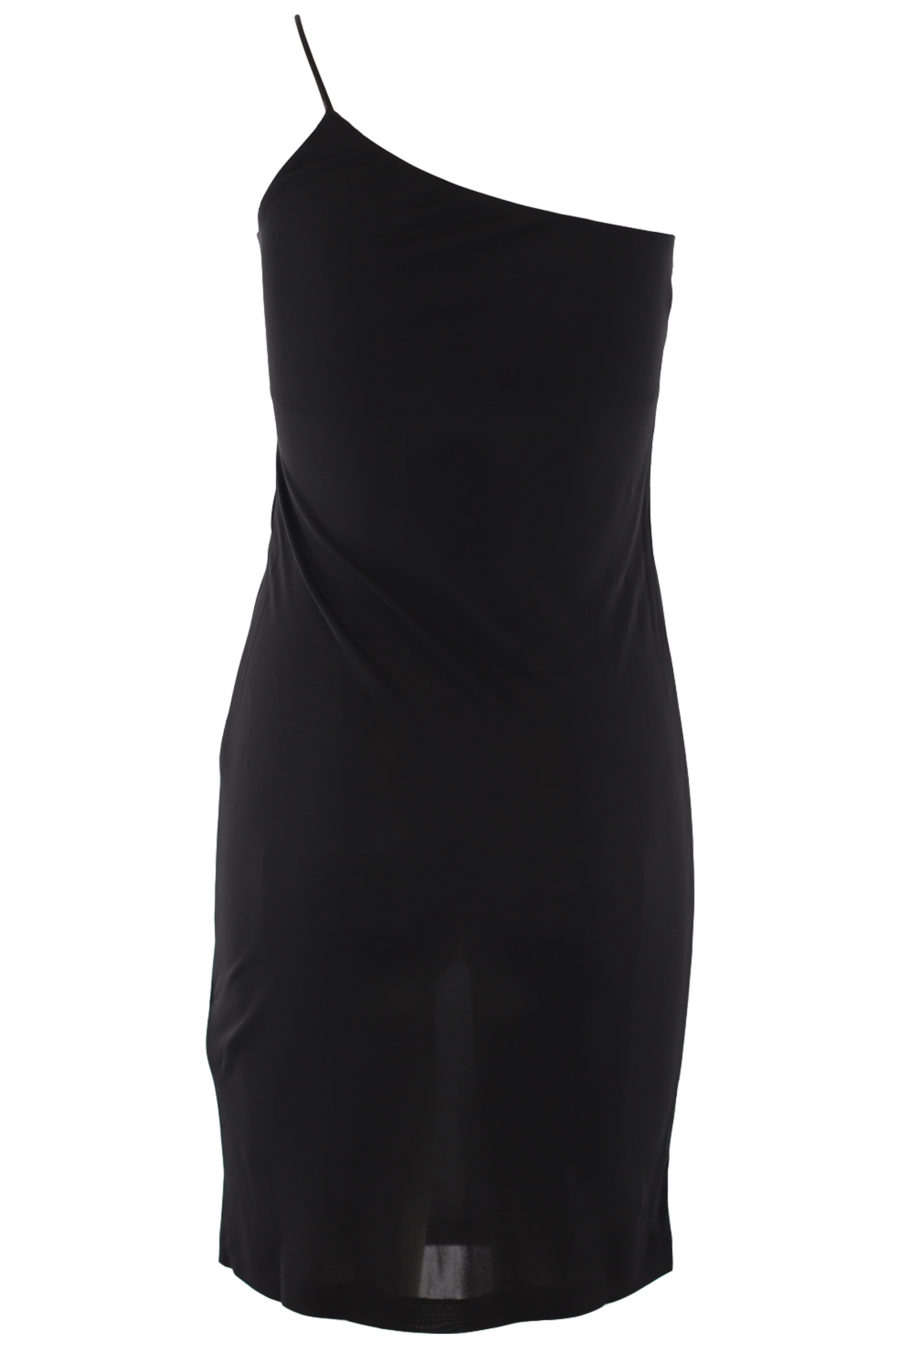 Asymmetric black dress - IMG 0730